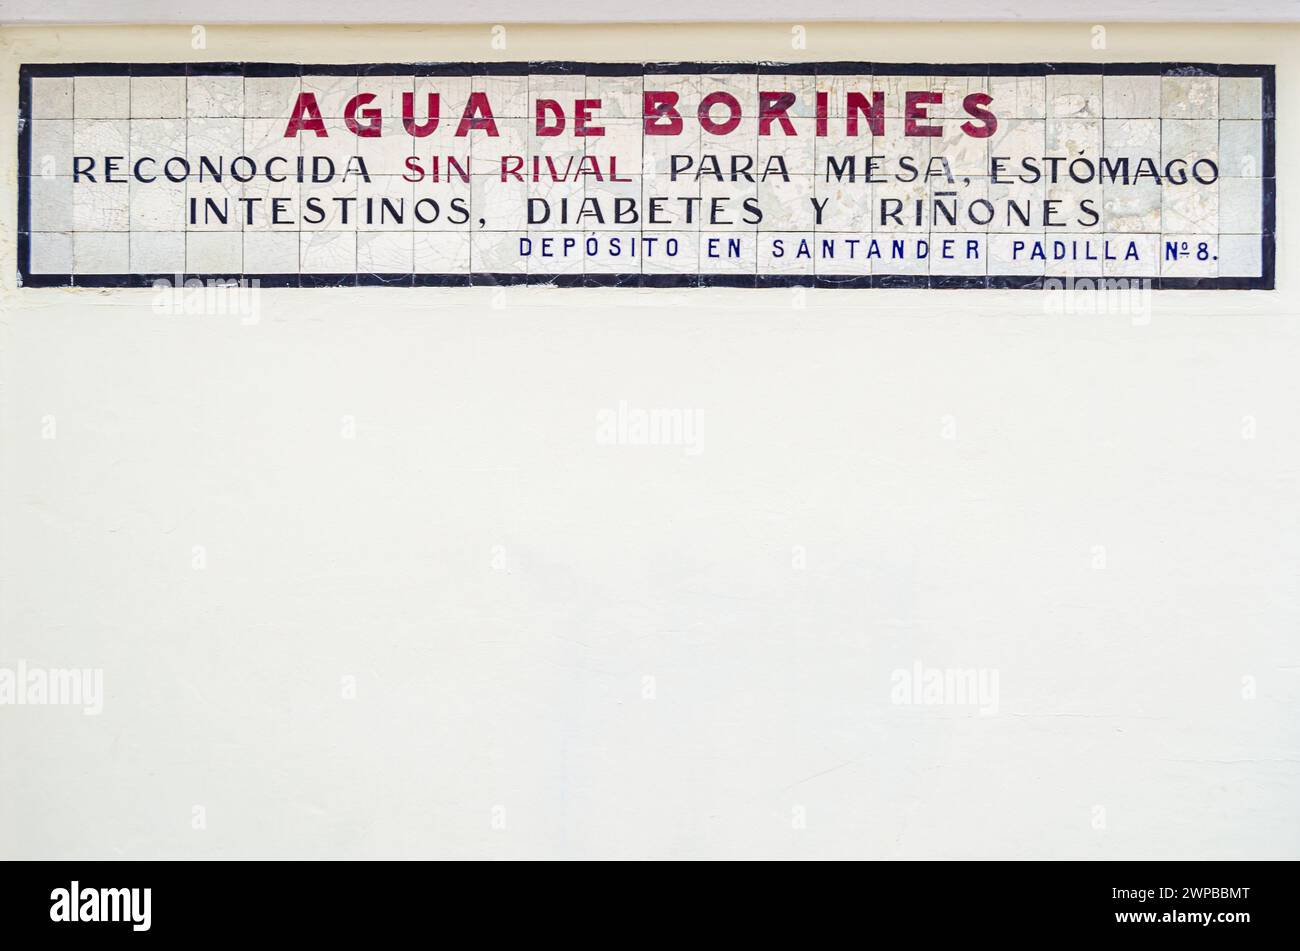 SANTANDER, SPAIN - MAY 1, 2014: Ceramic advertising mural of Agua de Borines, located on the facade of the Mercado del Este in Santander, Spain, made Stock Photo